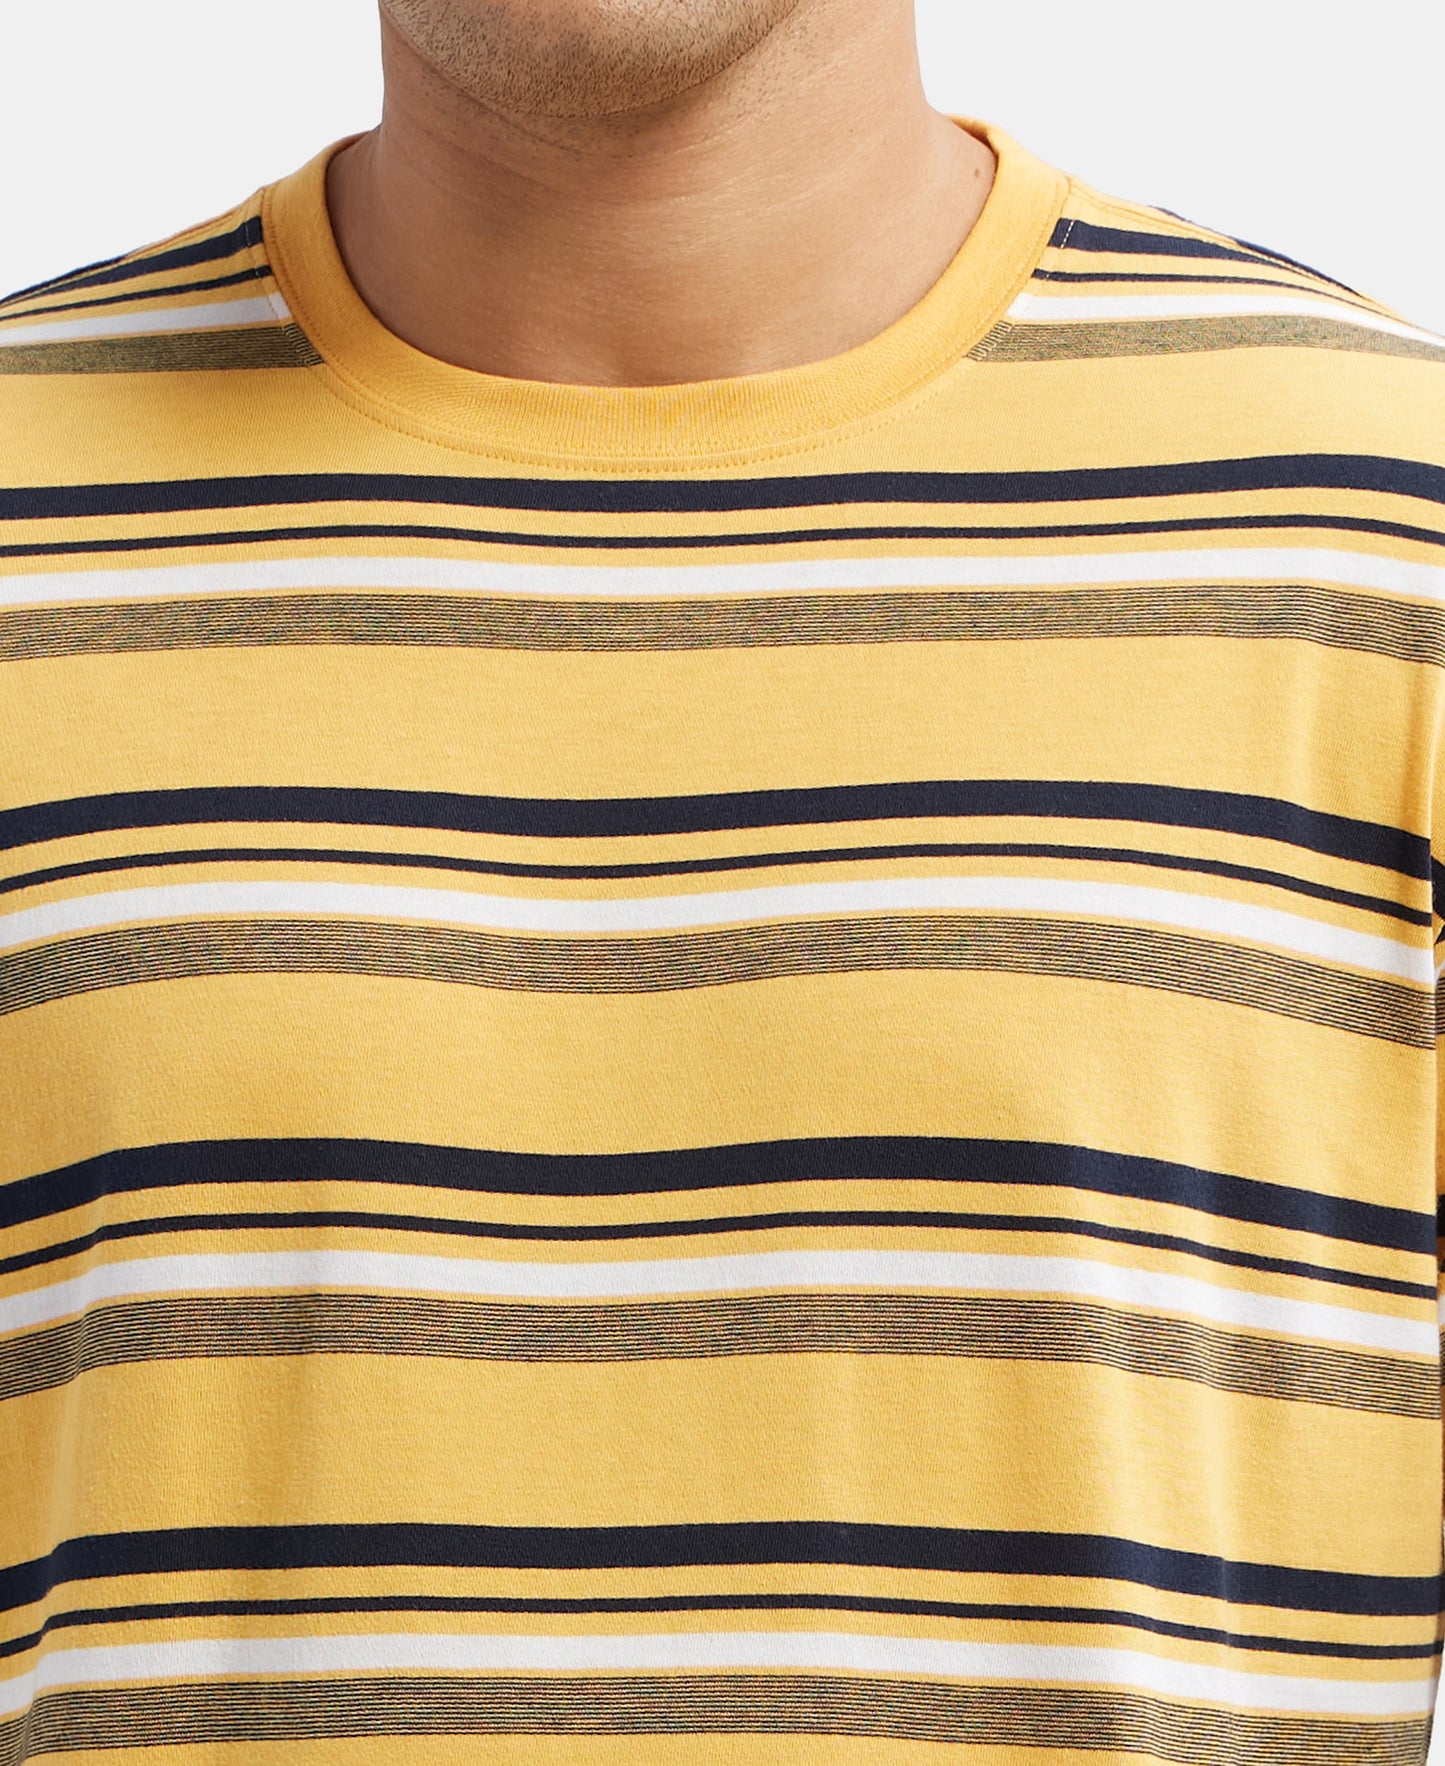 Super Combed Cotton Rich Striped Round Neck Half Sleeve T-Shirt - Burnt Gold - Navy - White